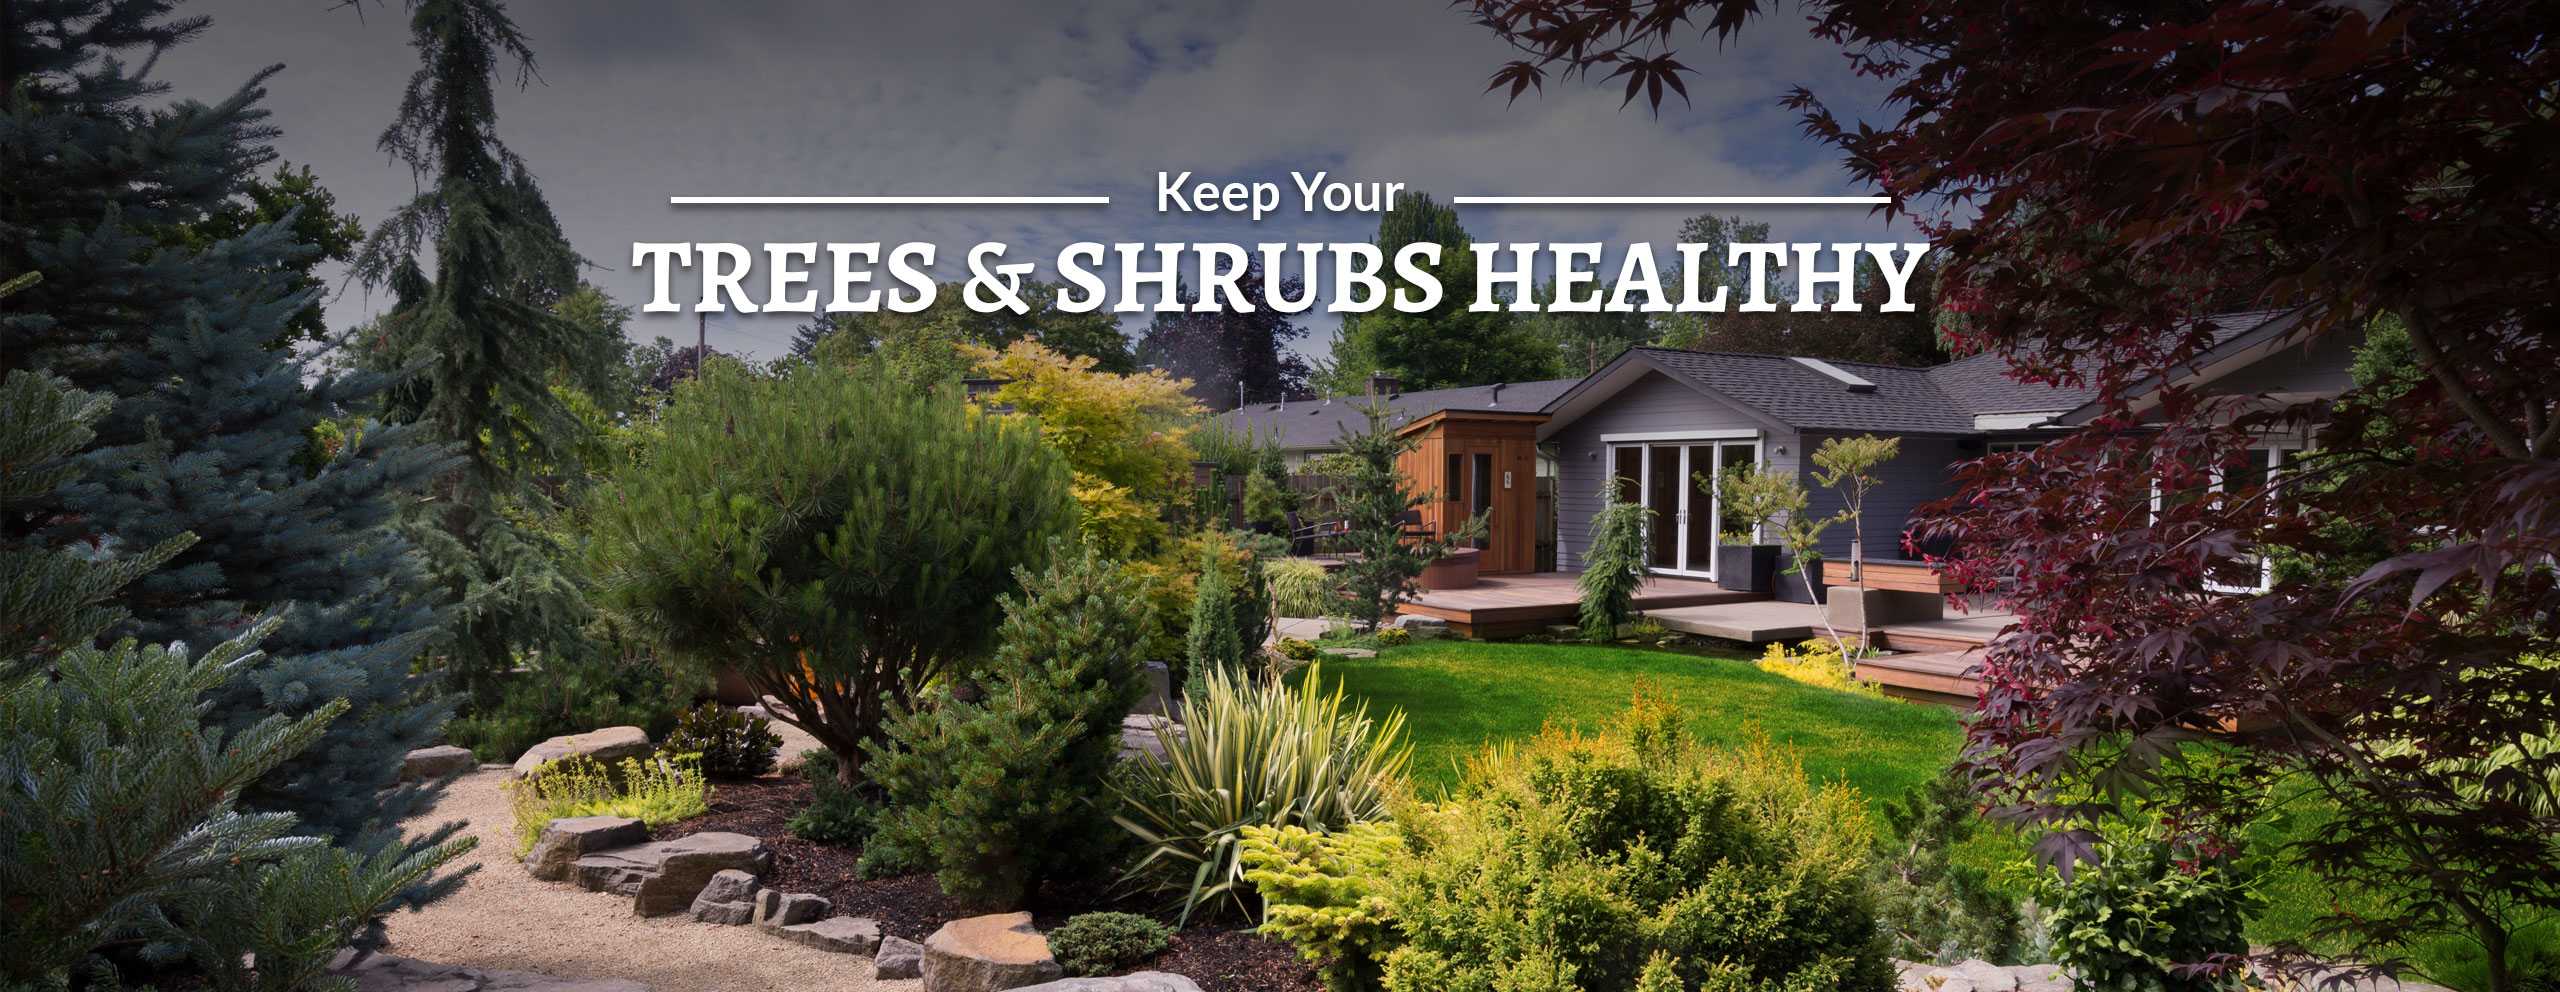 slide-02-keep-your-trees-shrubs-healthy